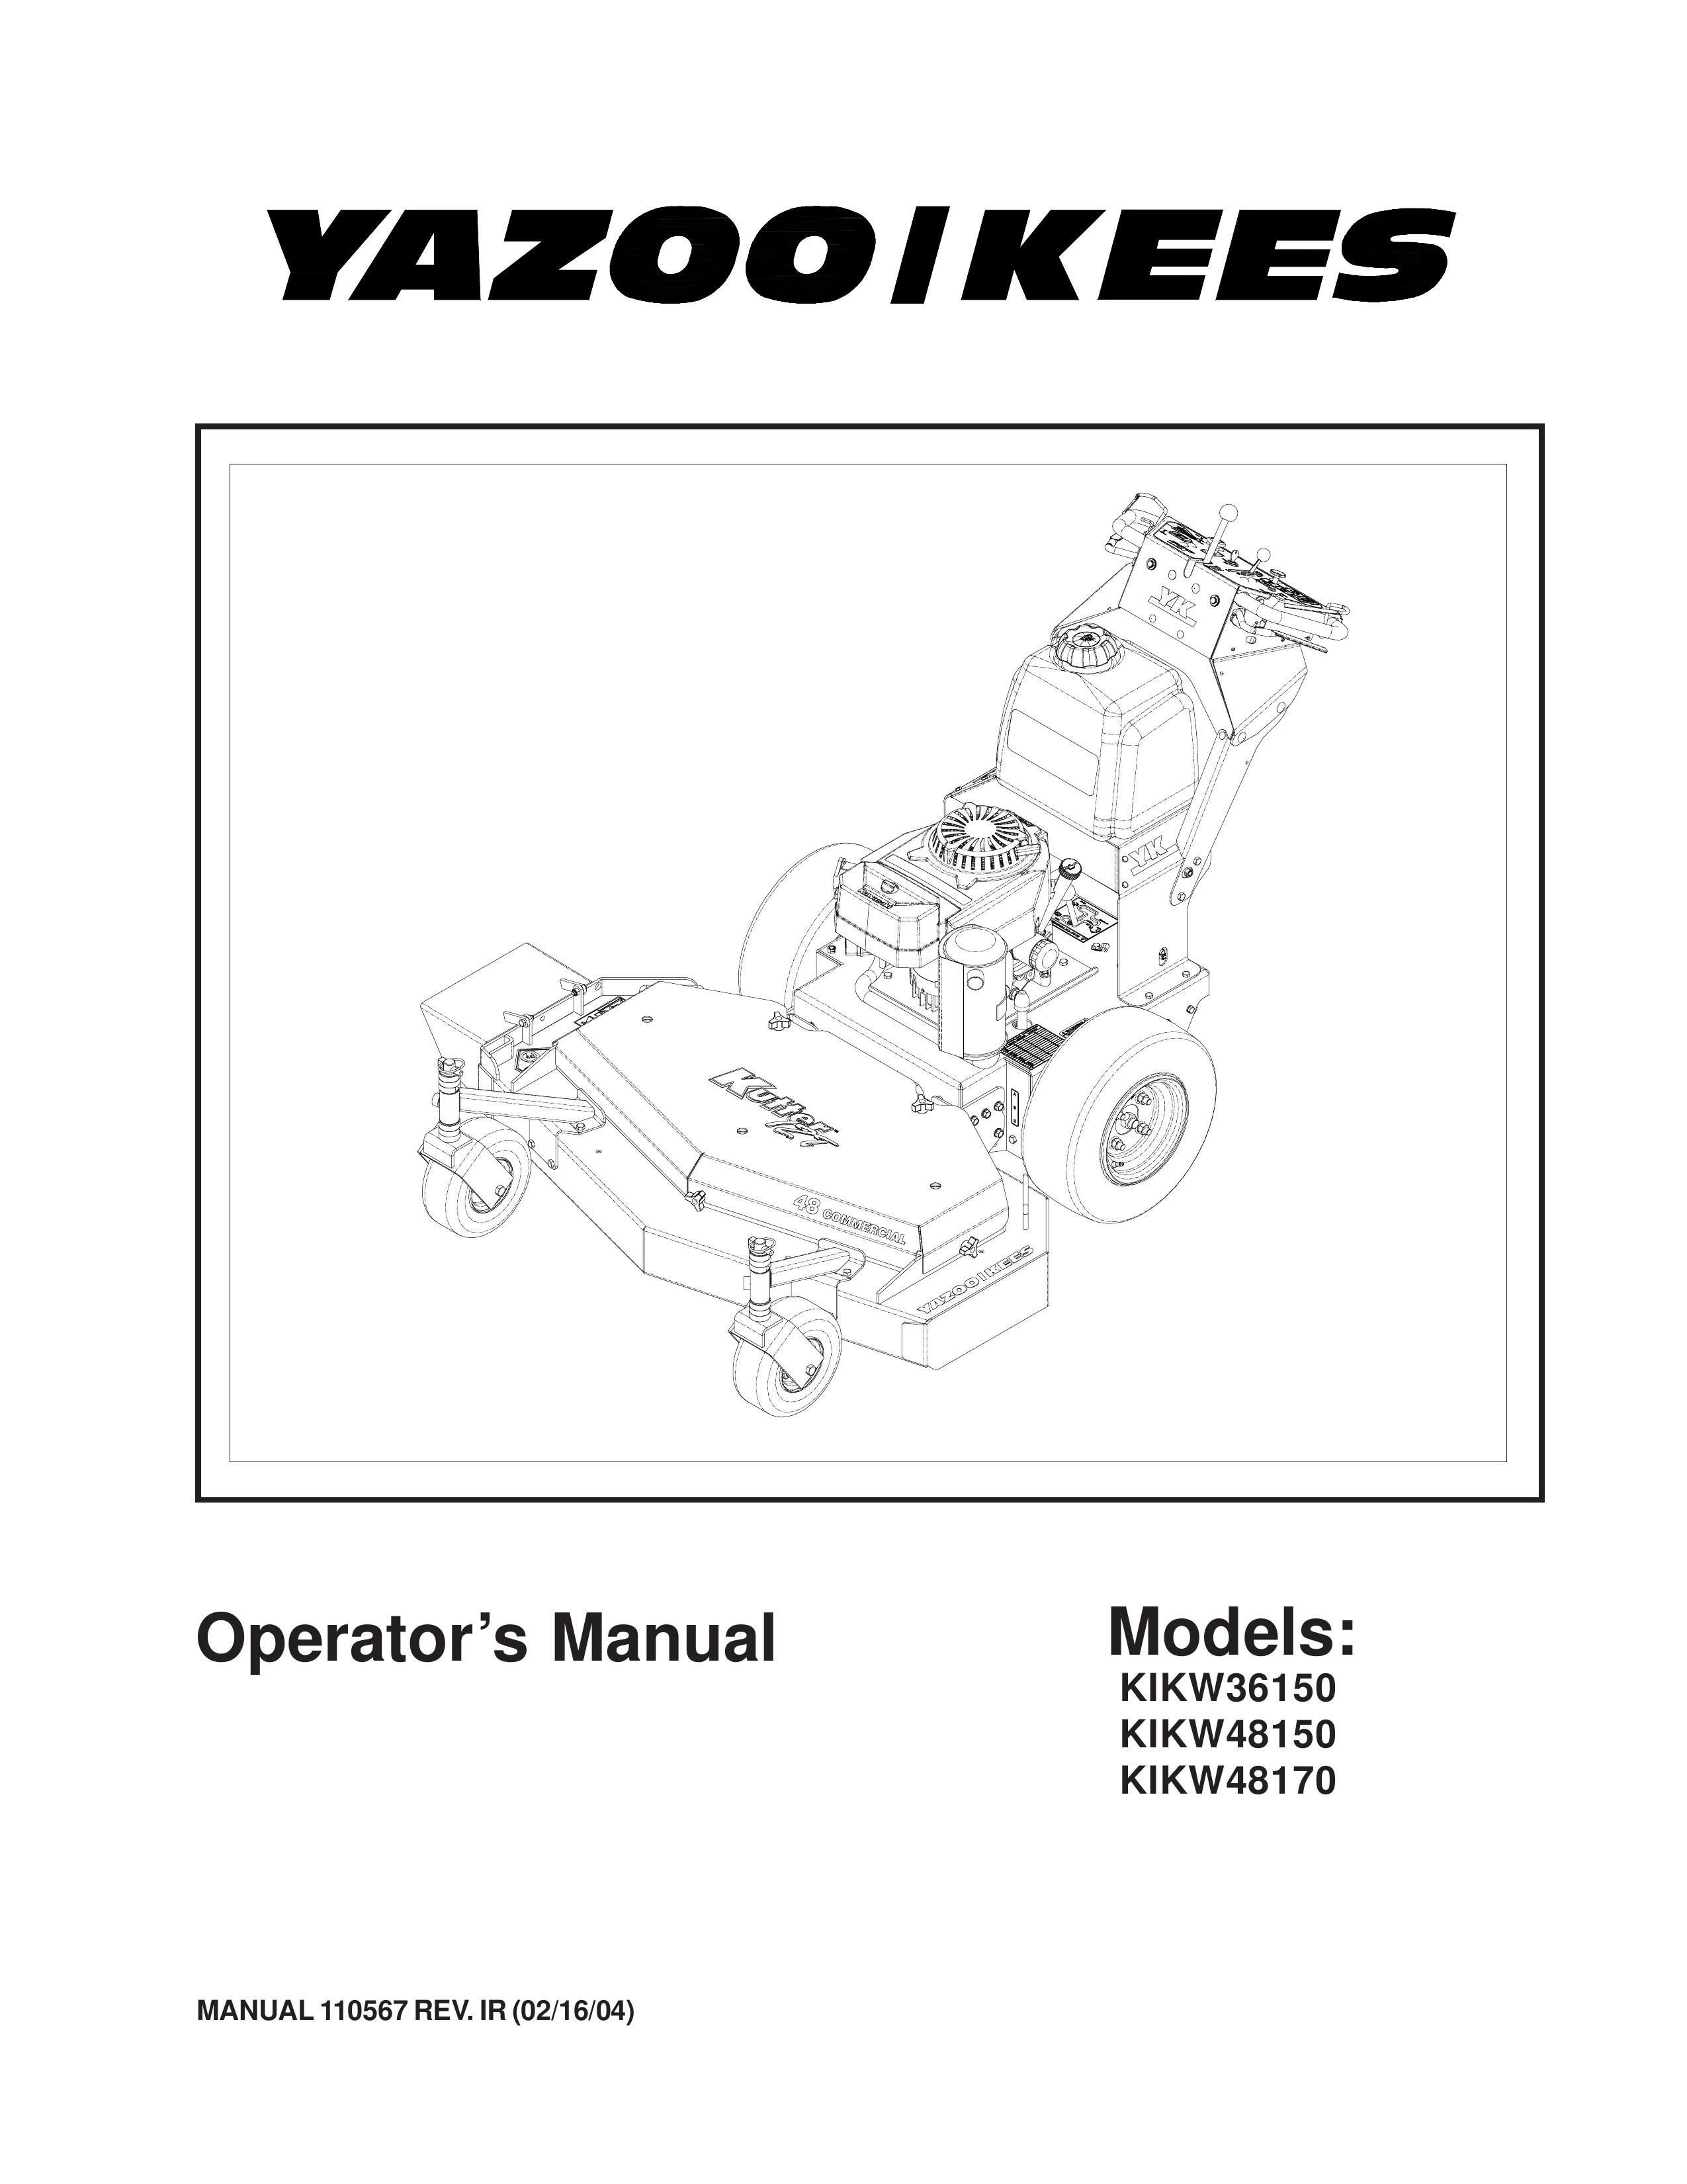 Yazoo/Kees KIKW36150, KIKW48150, KIKW48170 Lawn Mower User Manual